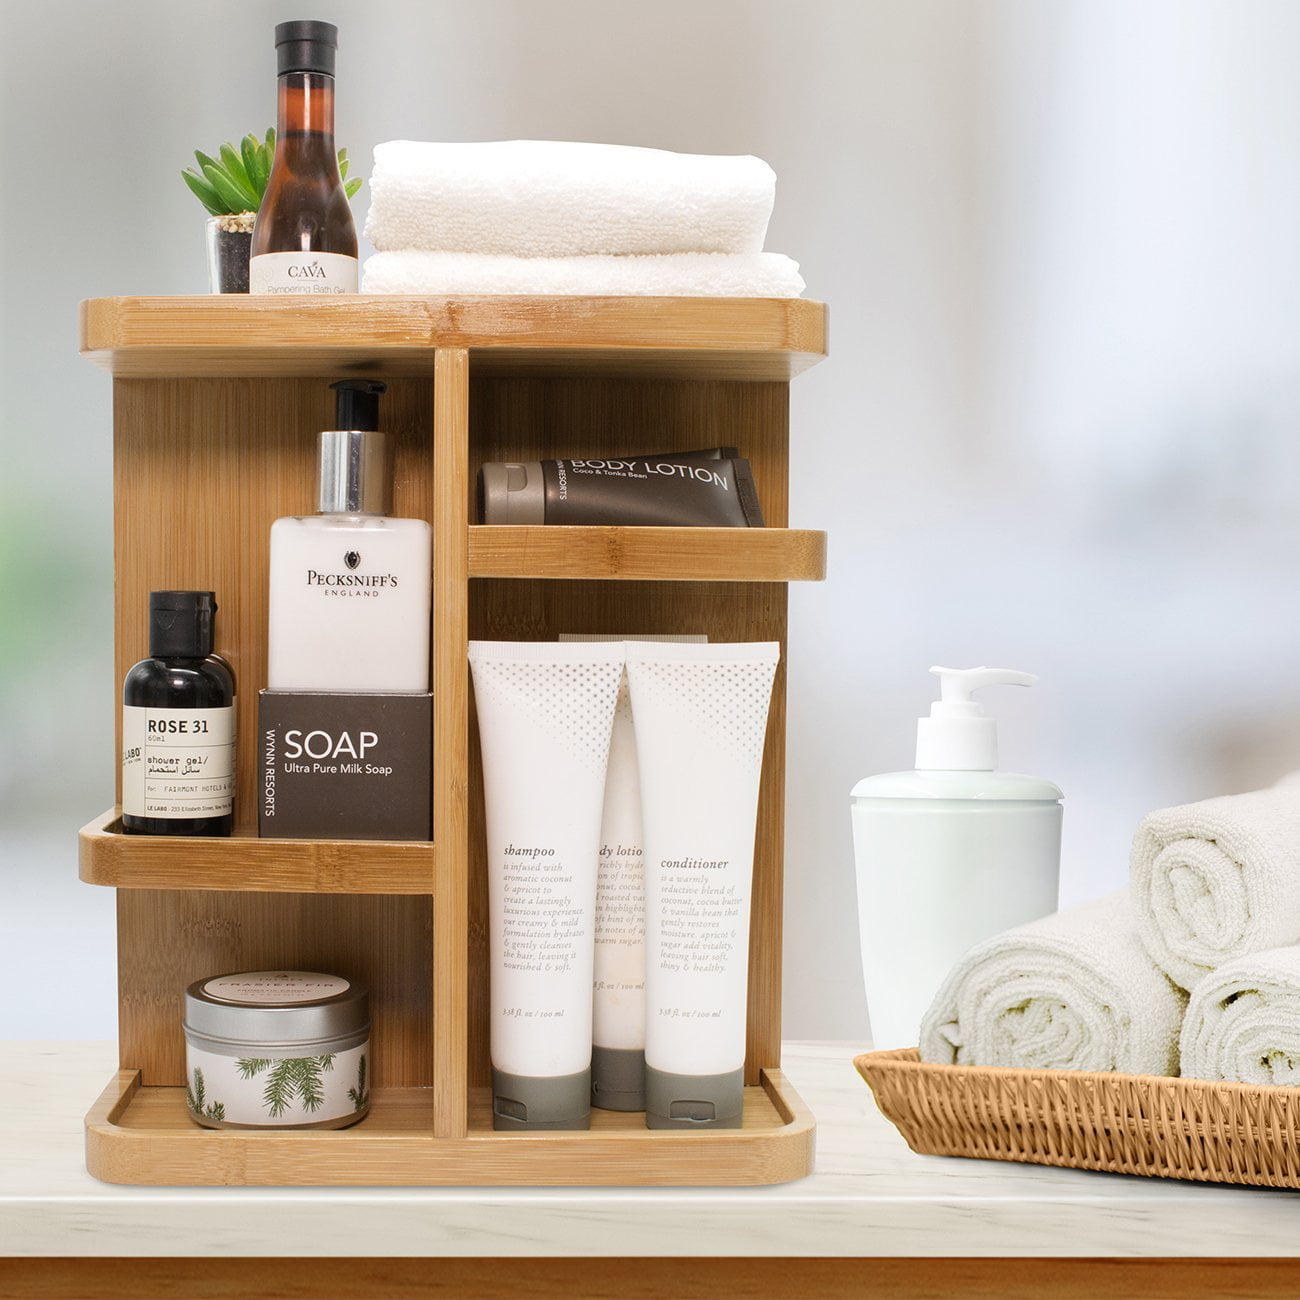 Sorbus Bamboo Makeup Organizer, Multi-Purpose Storage for Skincare, Toiletries, Desktop, Household Items, Display Stand Shelf